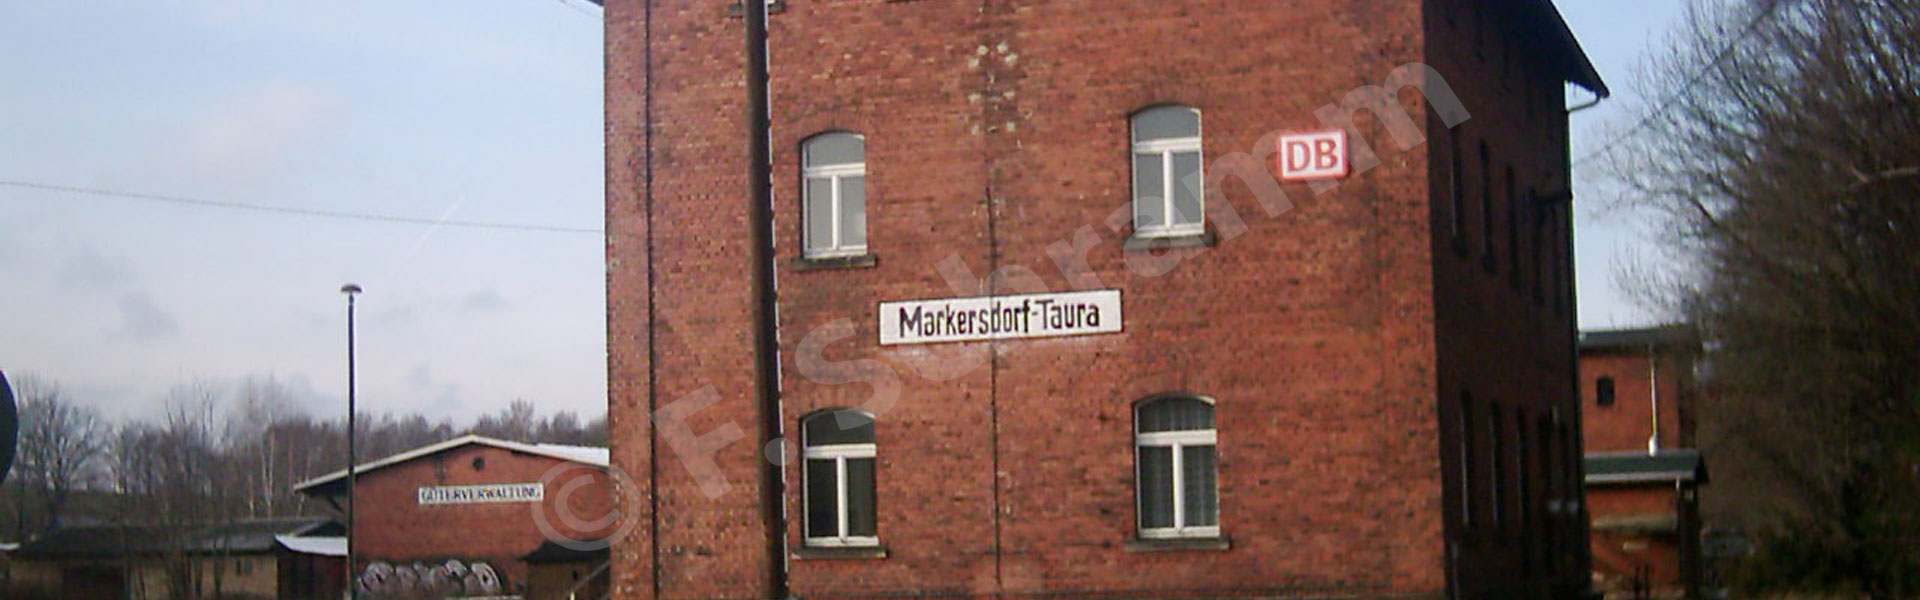 Teilansicht Bahnhofsgebäude Bahnhof Markersdorf-Taura (2004)